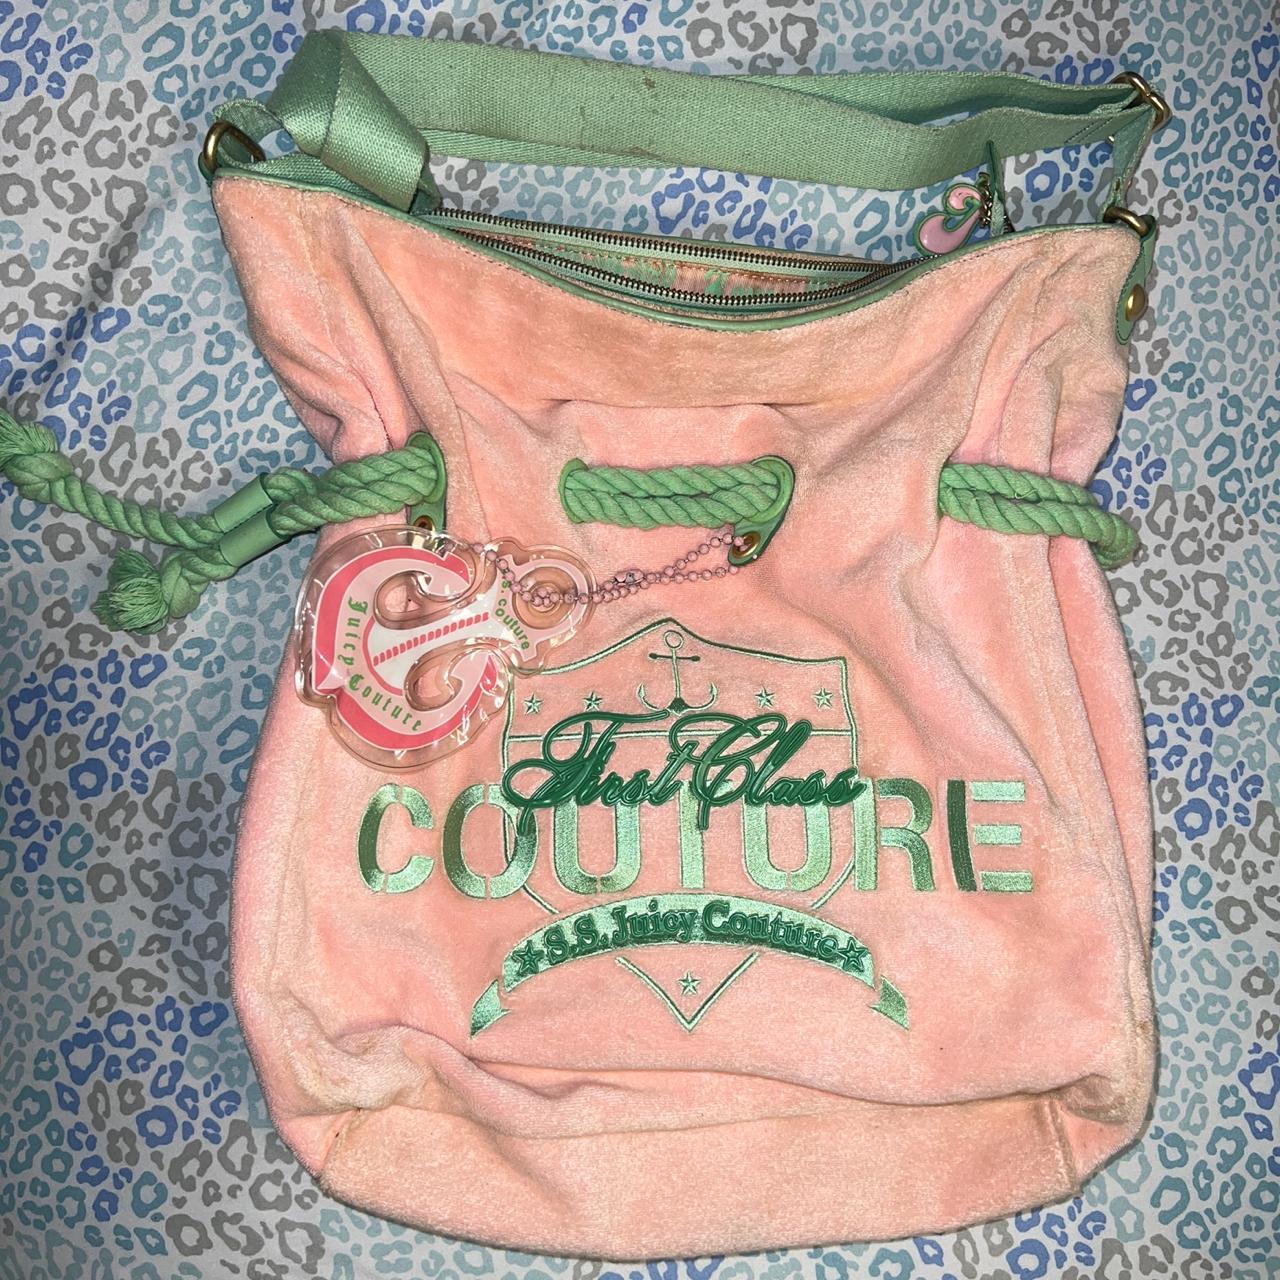 RARE pink and orange MIU MIU chest rig bag from - Depop